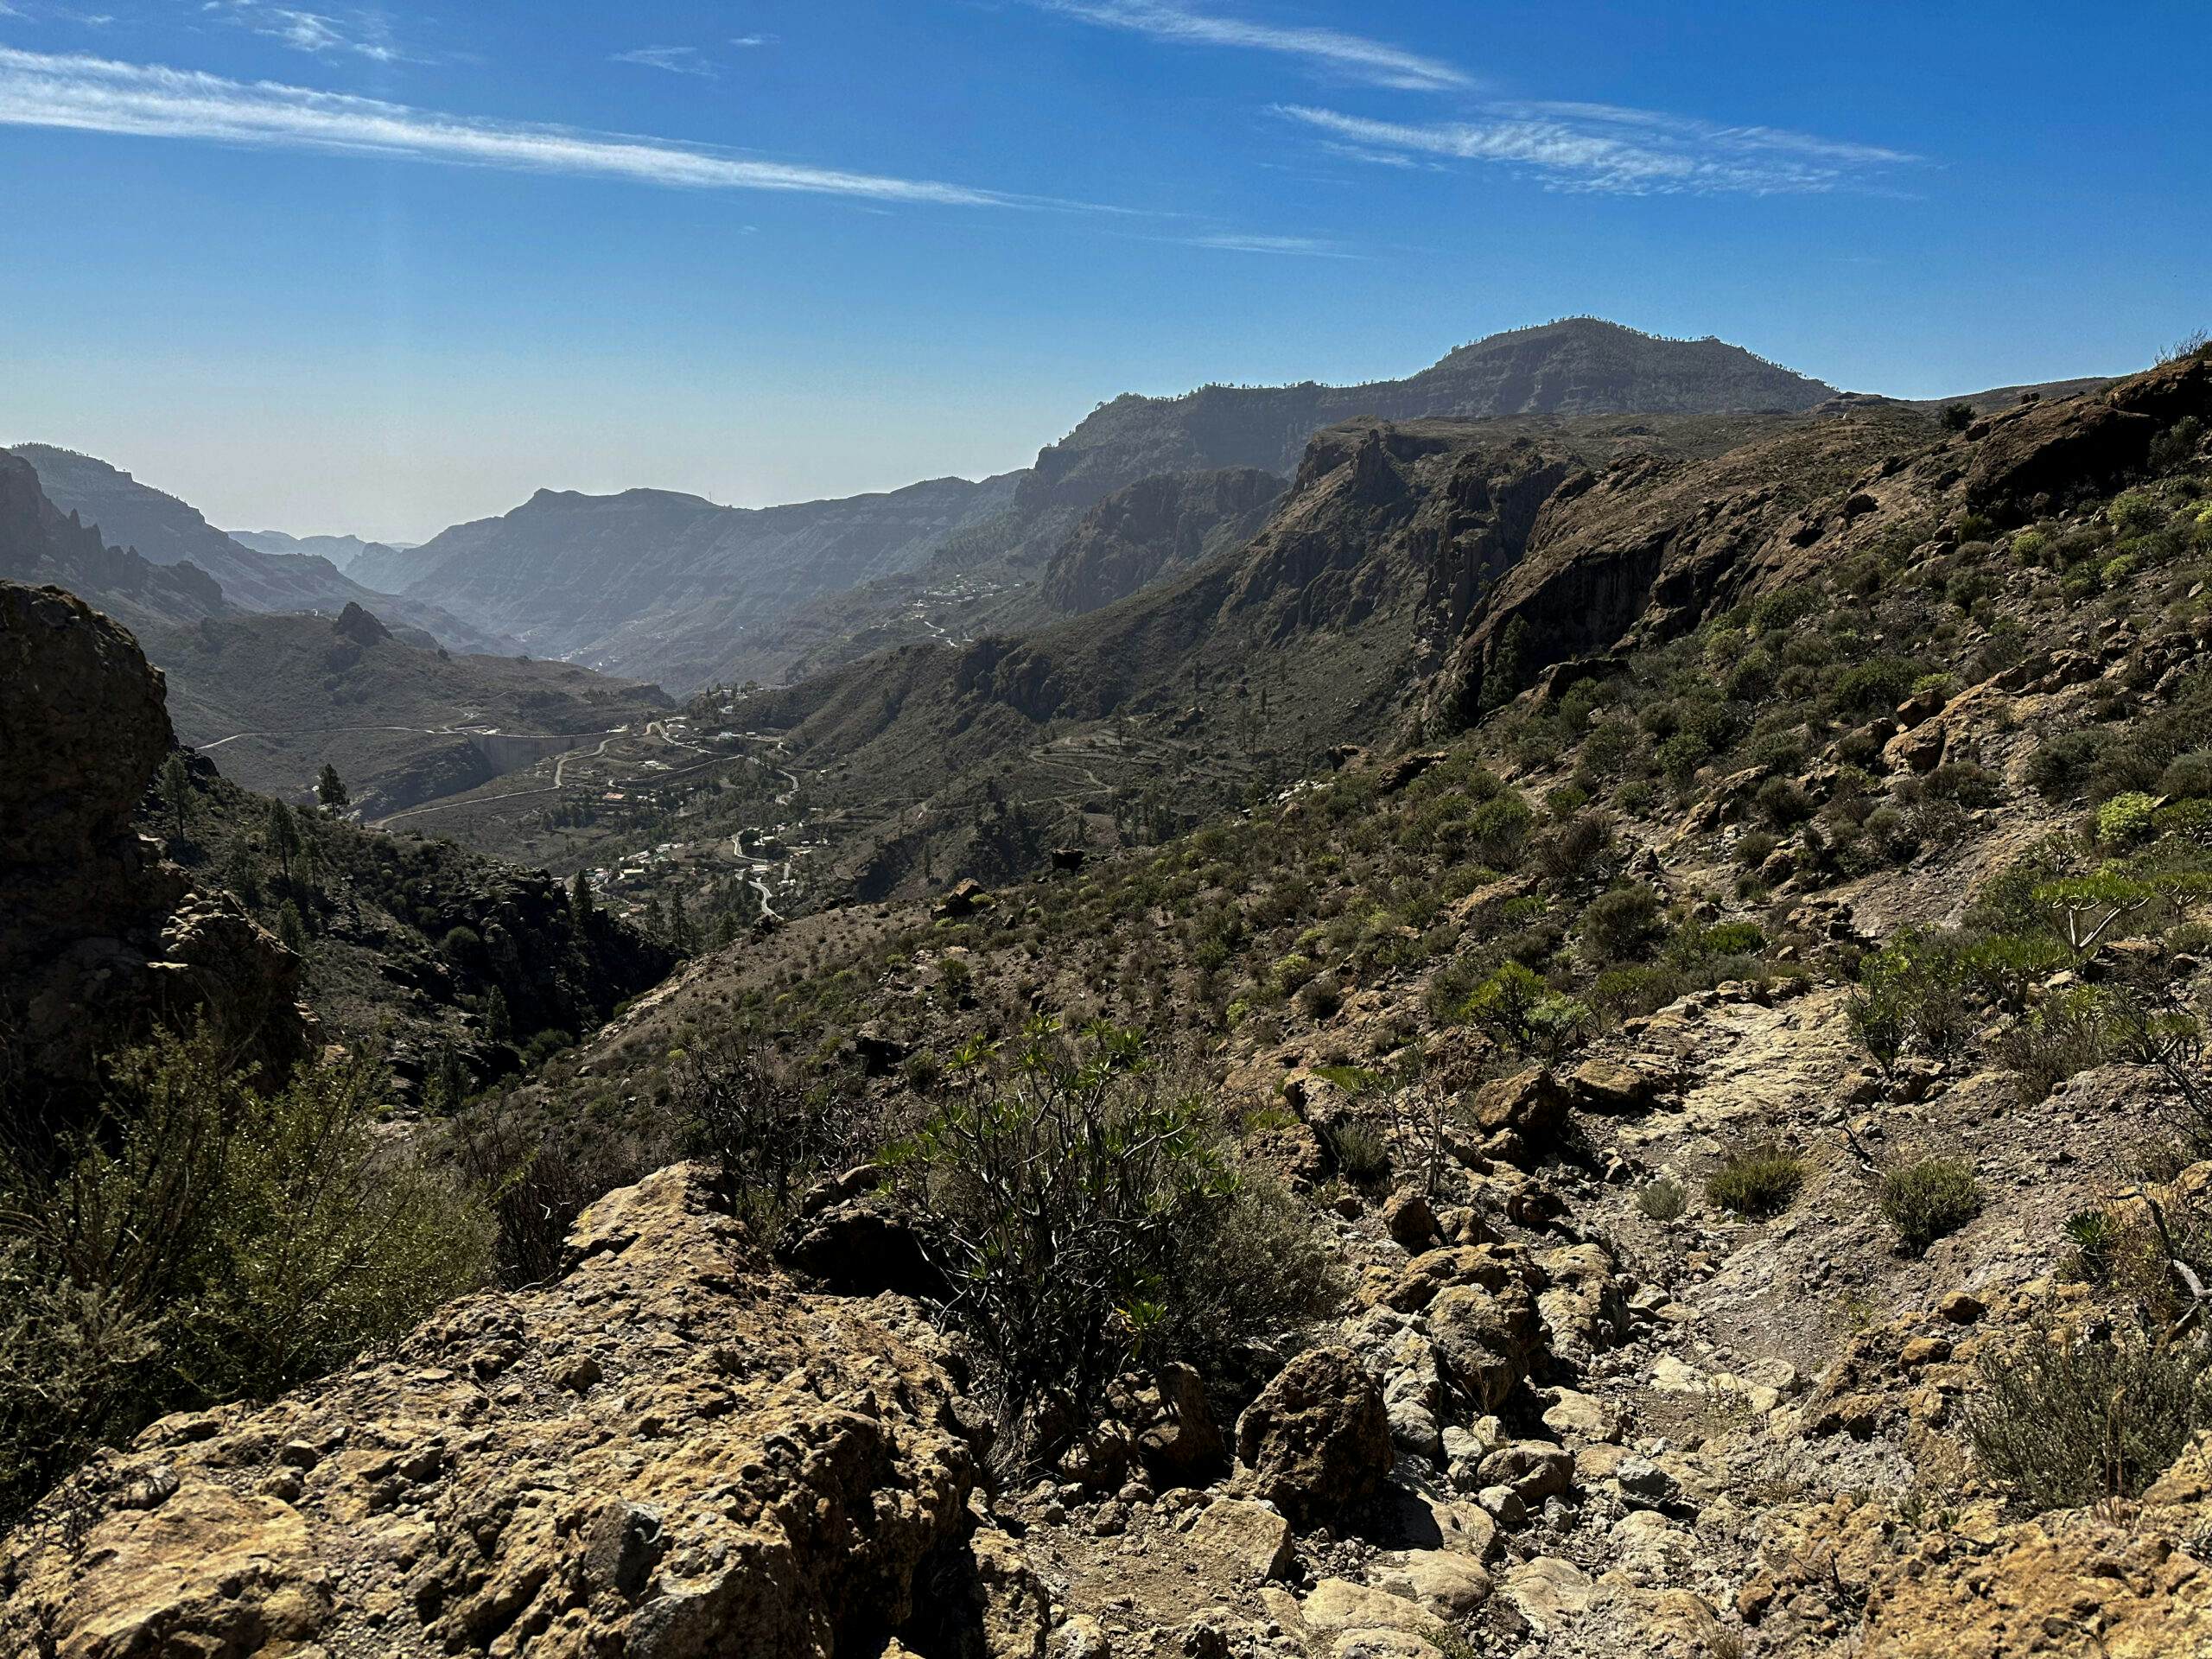 View from the ascent path Presa de Las Niñas back to Soria